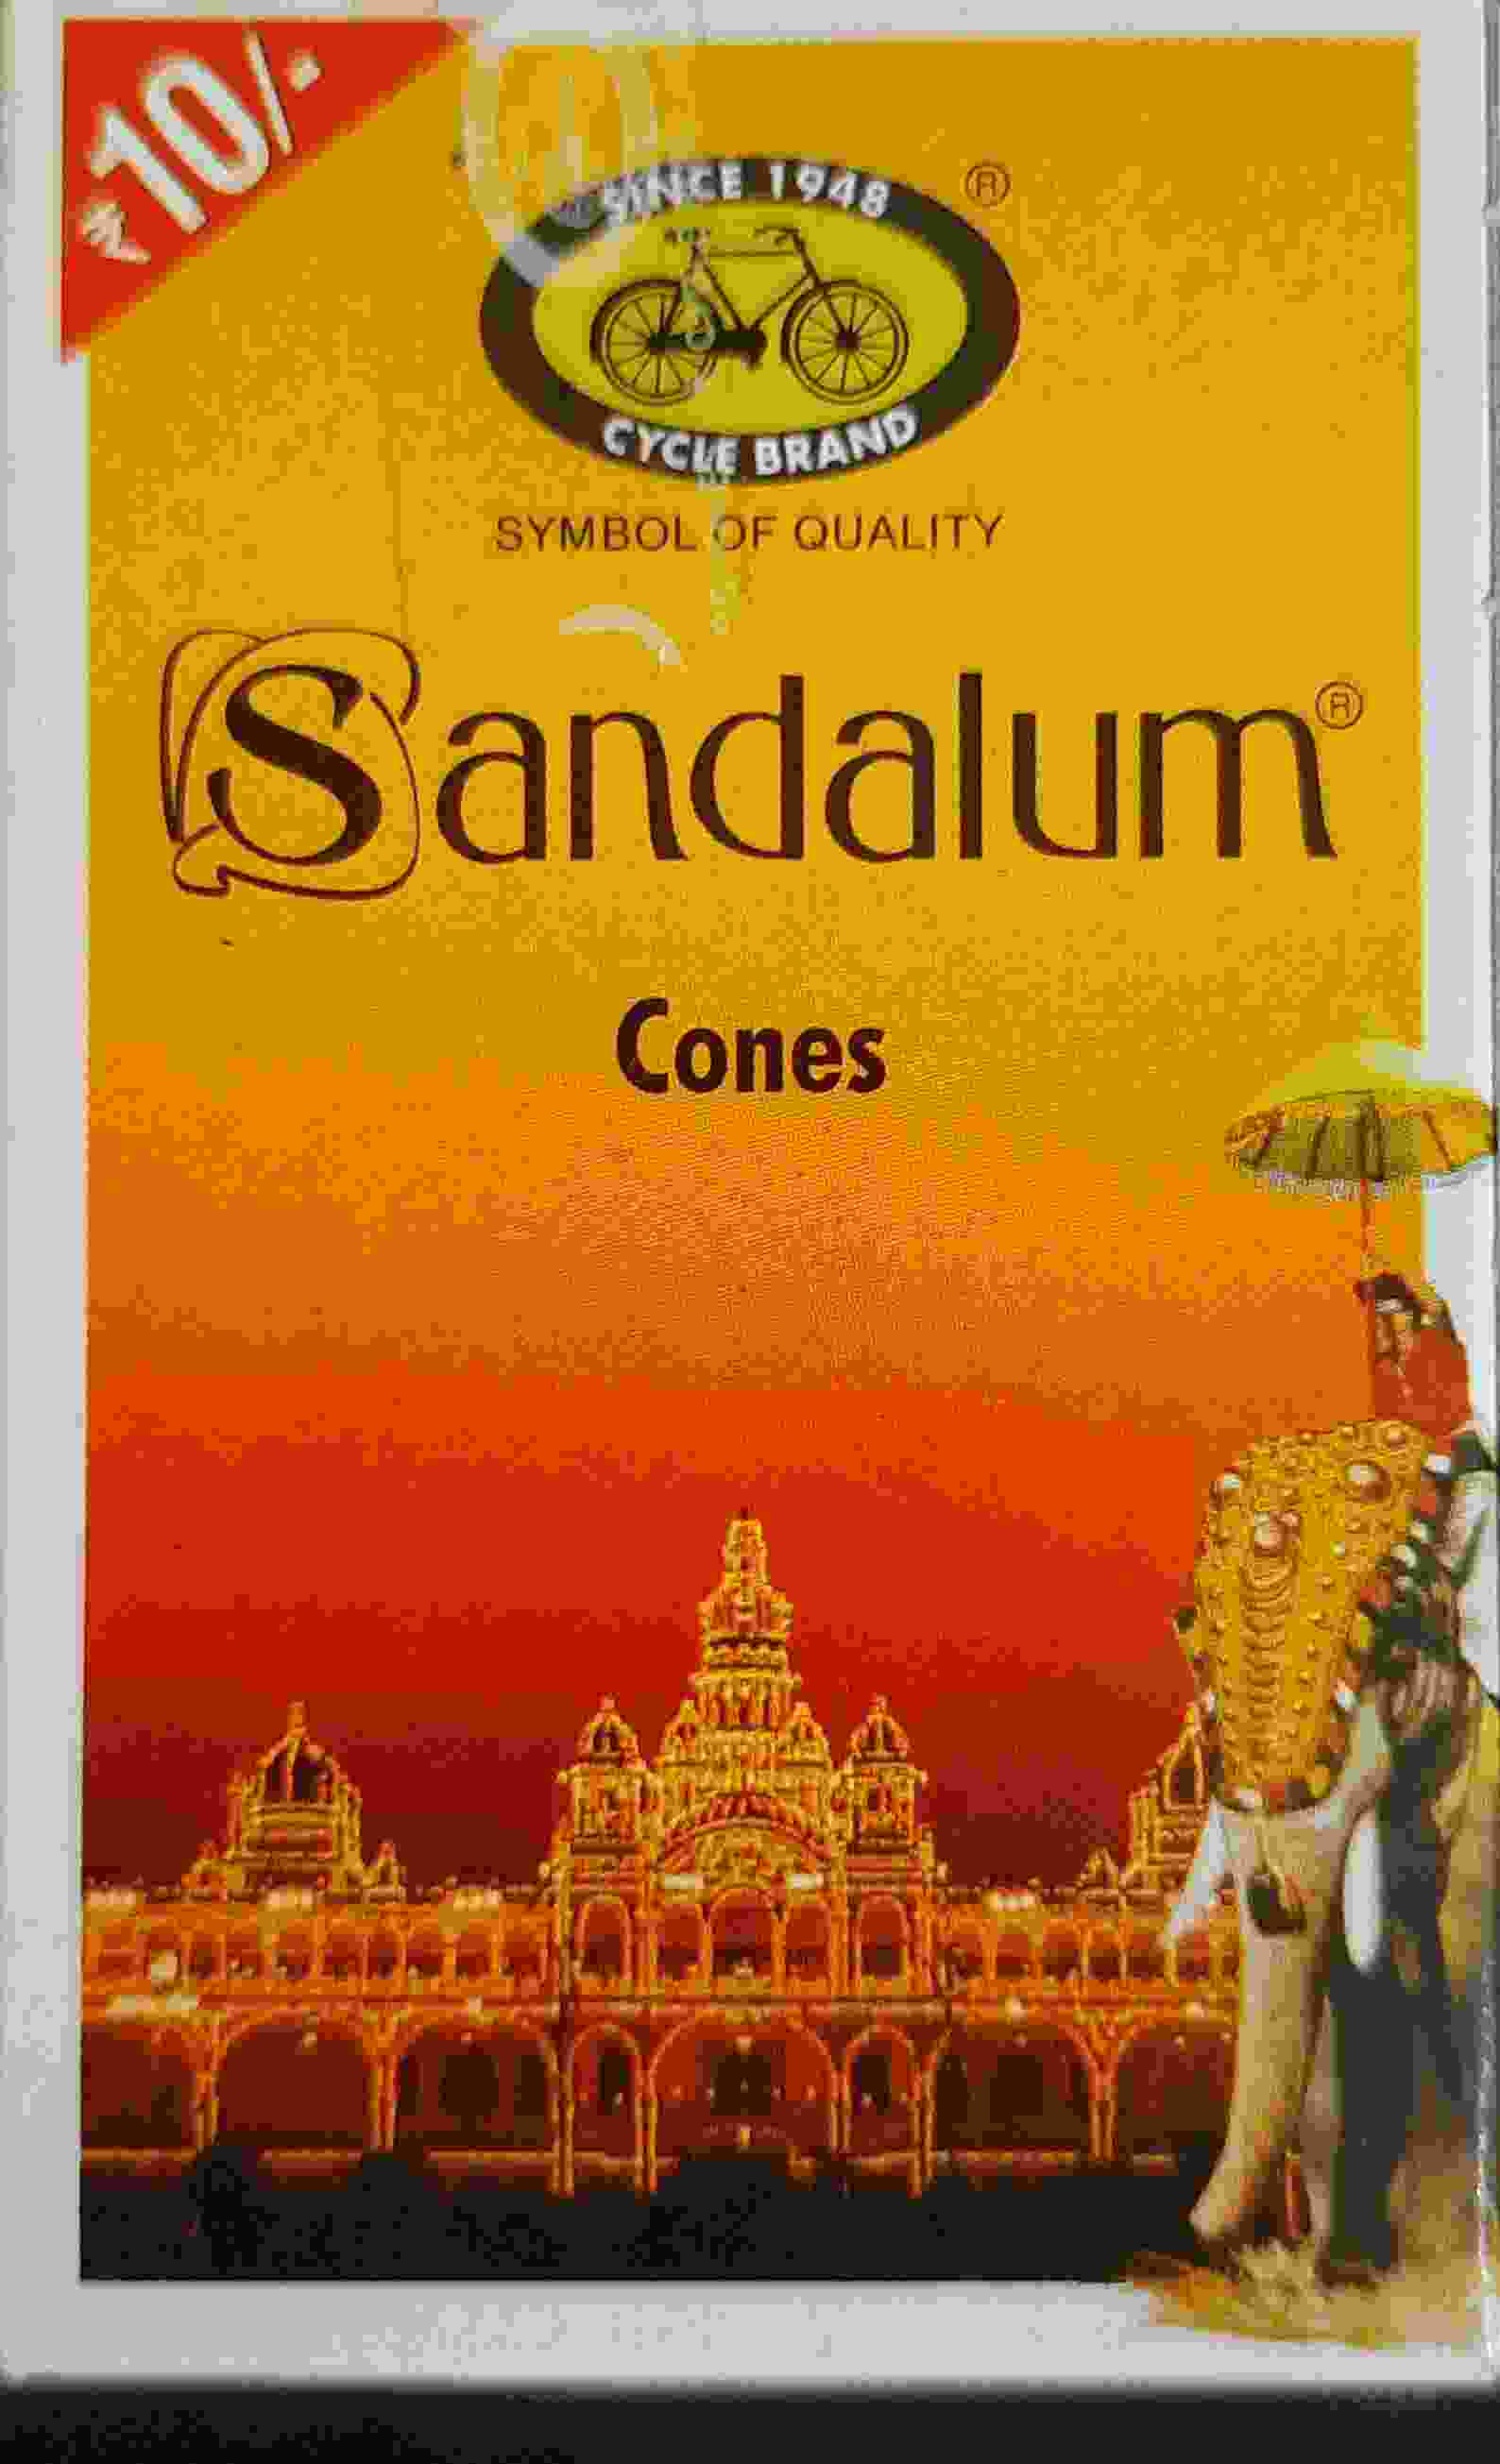 Cycle brand - Sandalum Cones